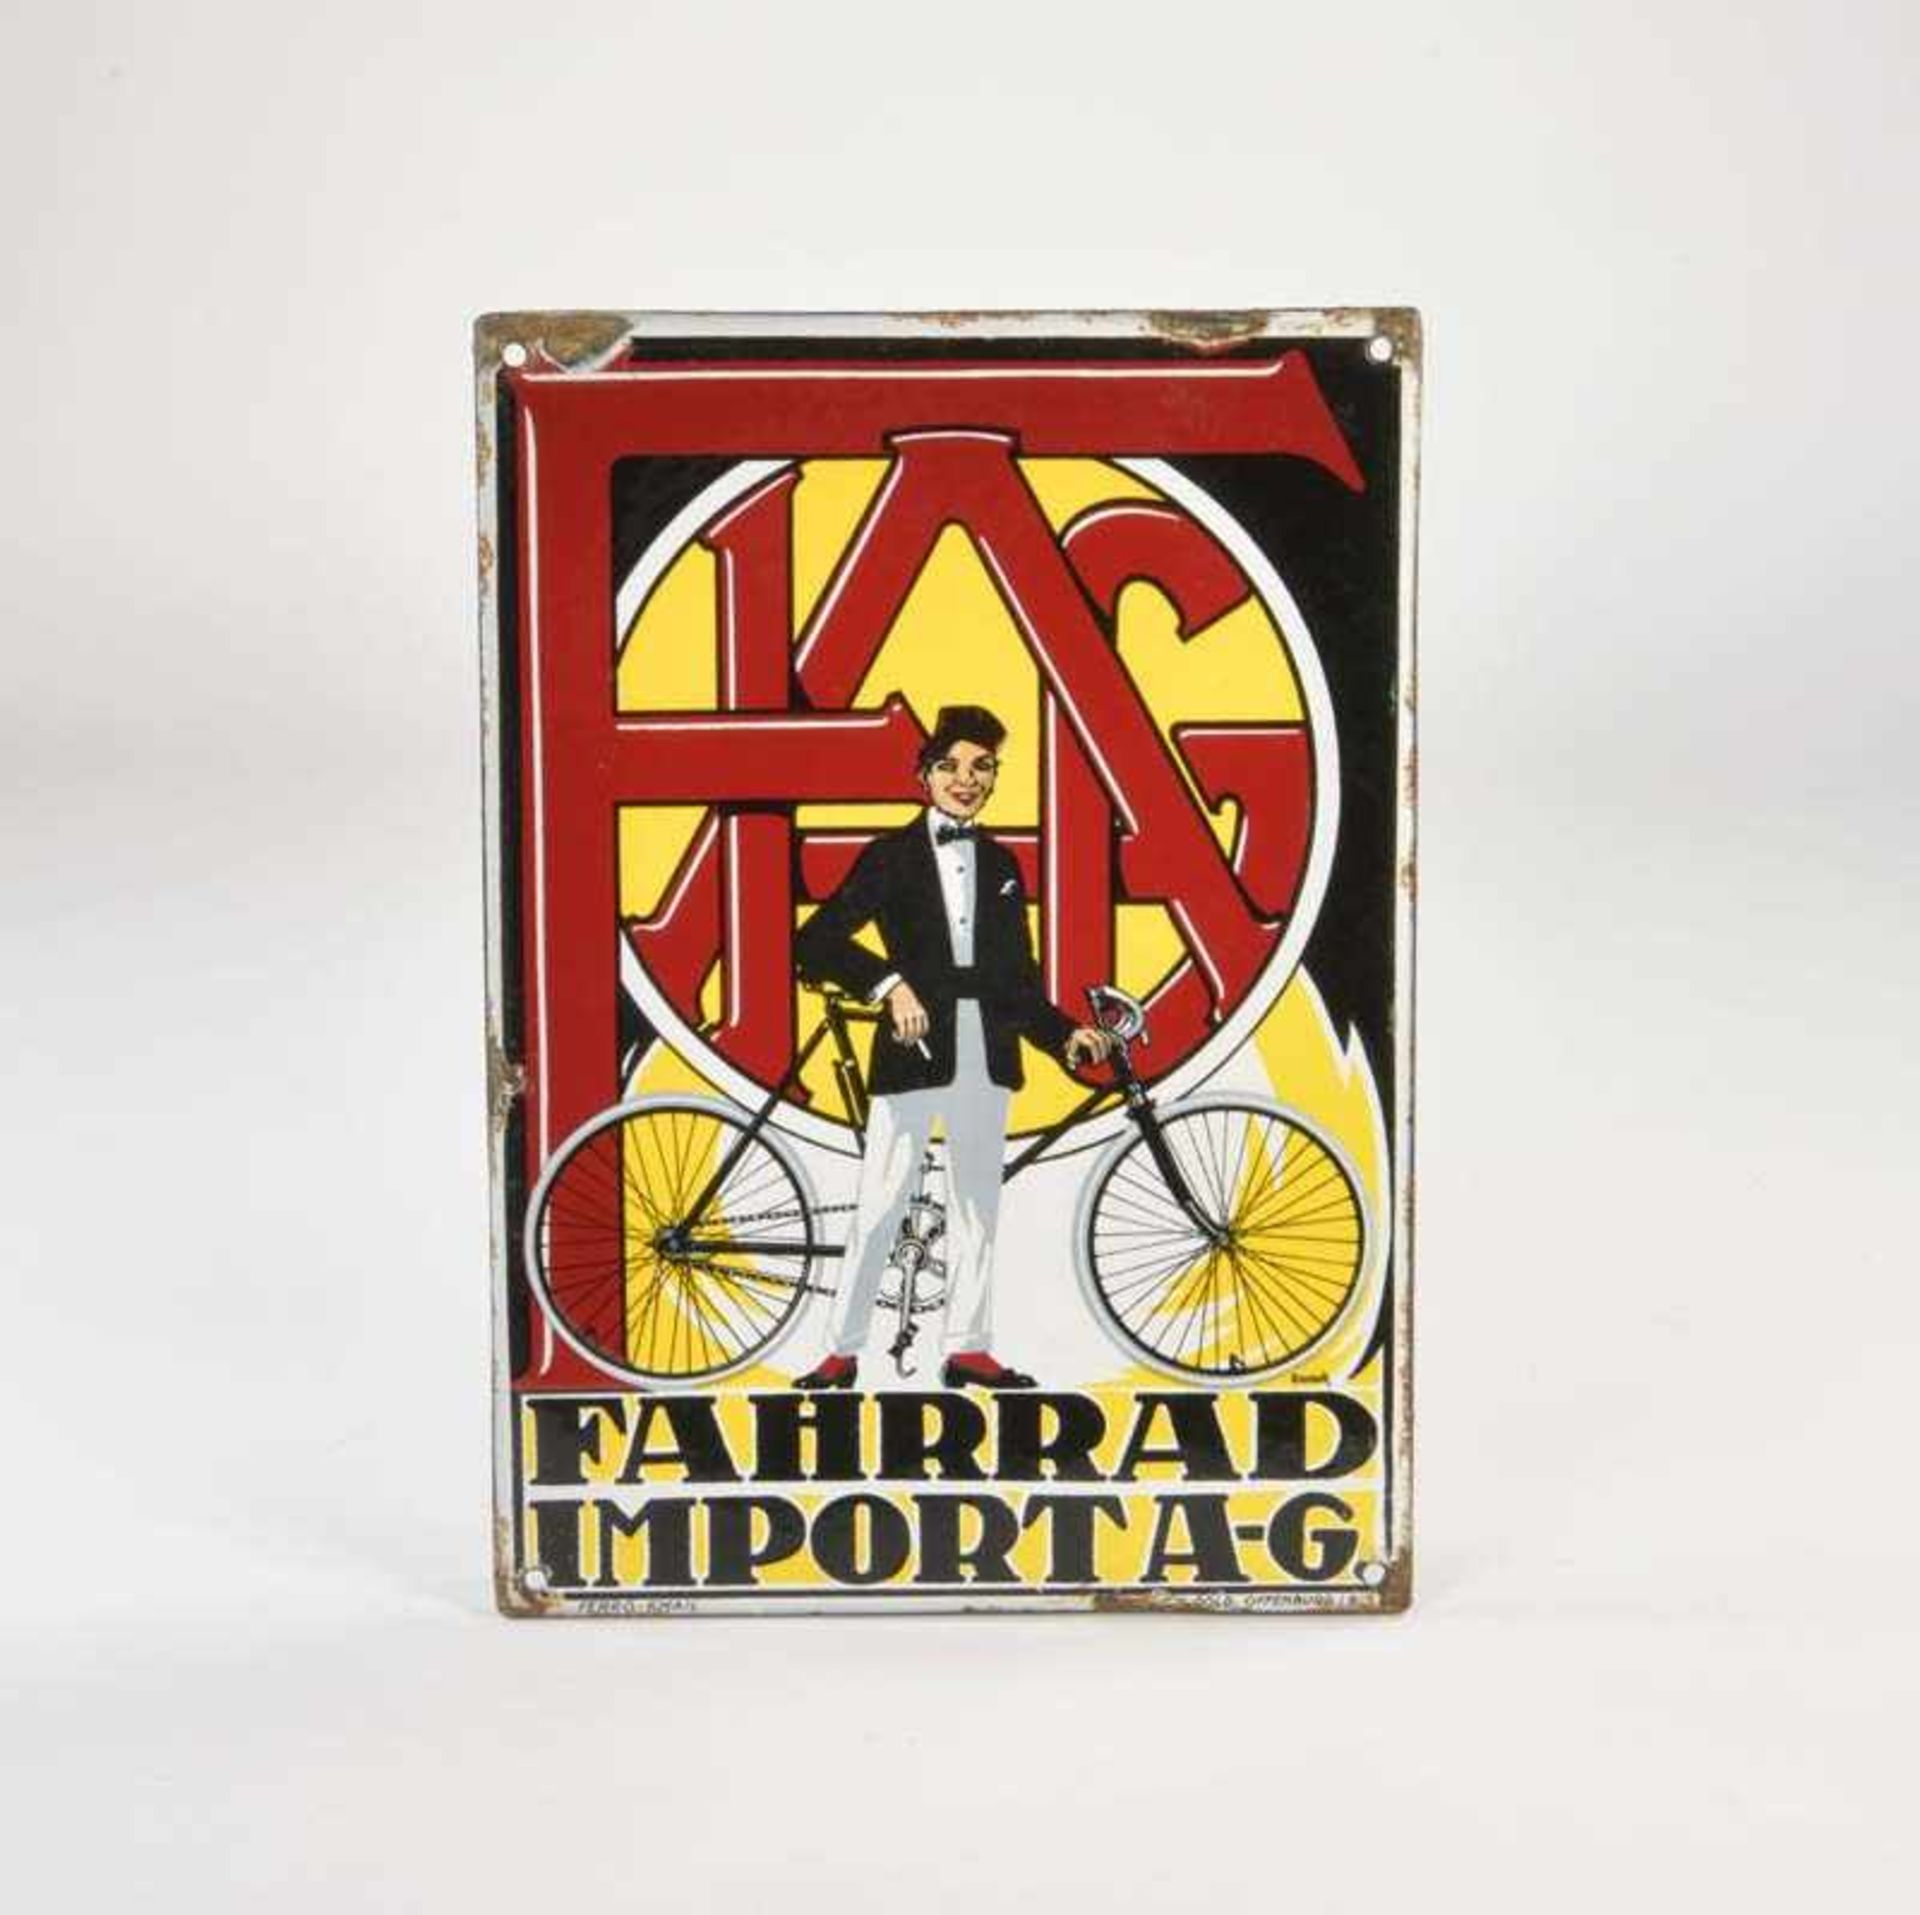 Emailleschild "FAG Fahrrad Import AG", 27x38 cm, abgekantet, 1910, min. LM an den Rändern, sonst